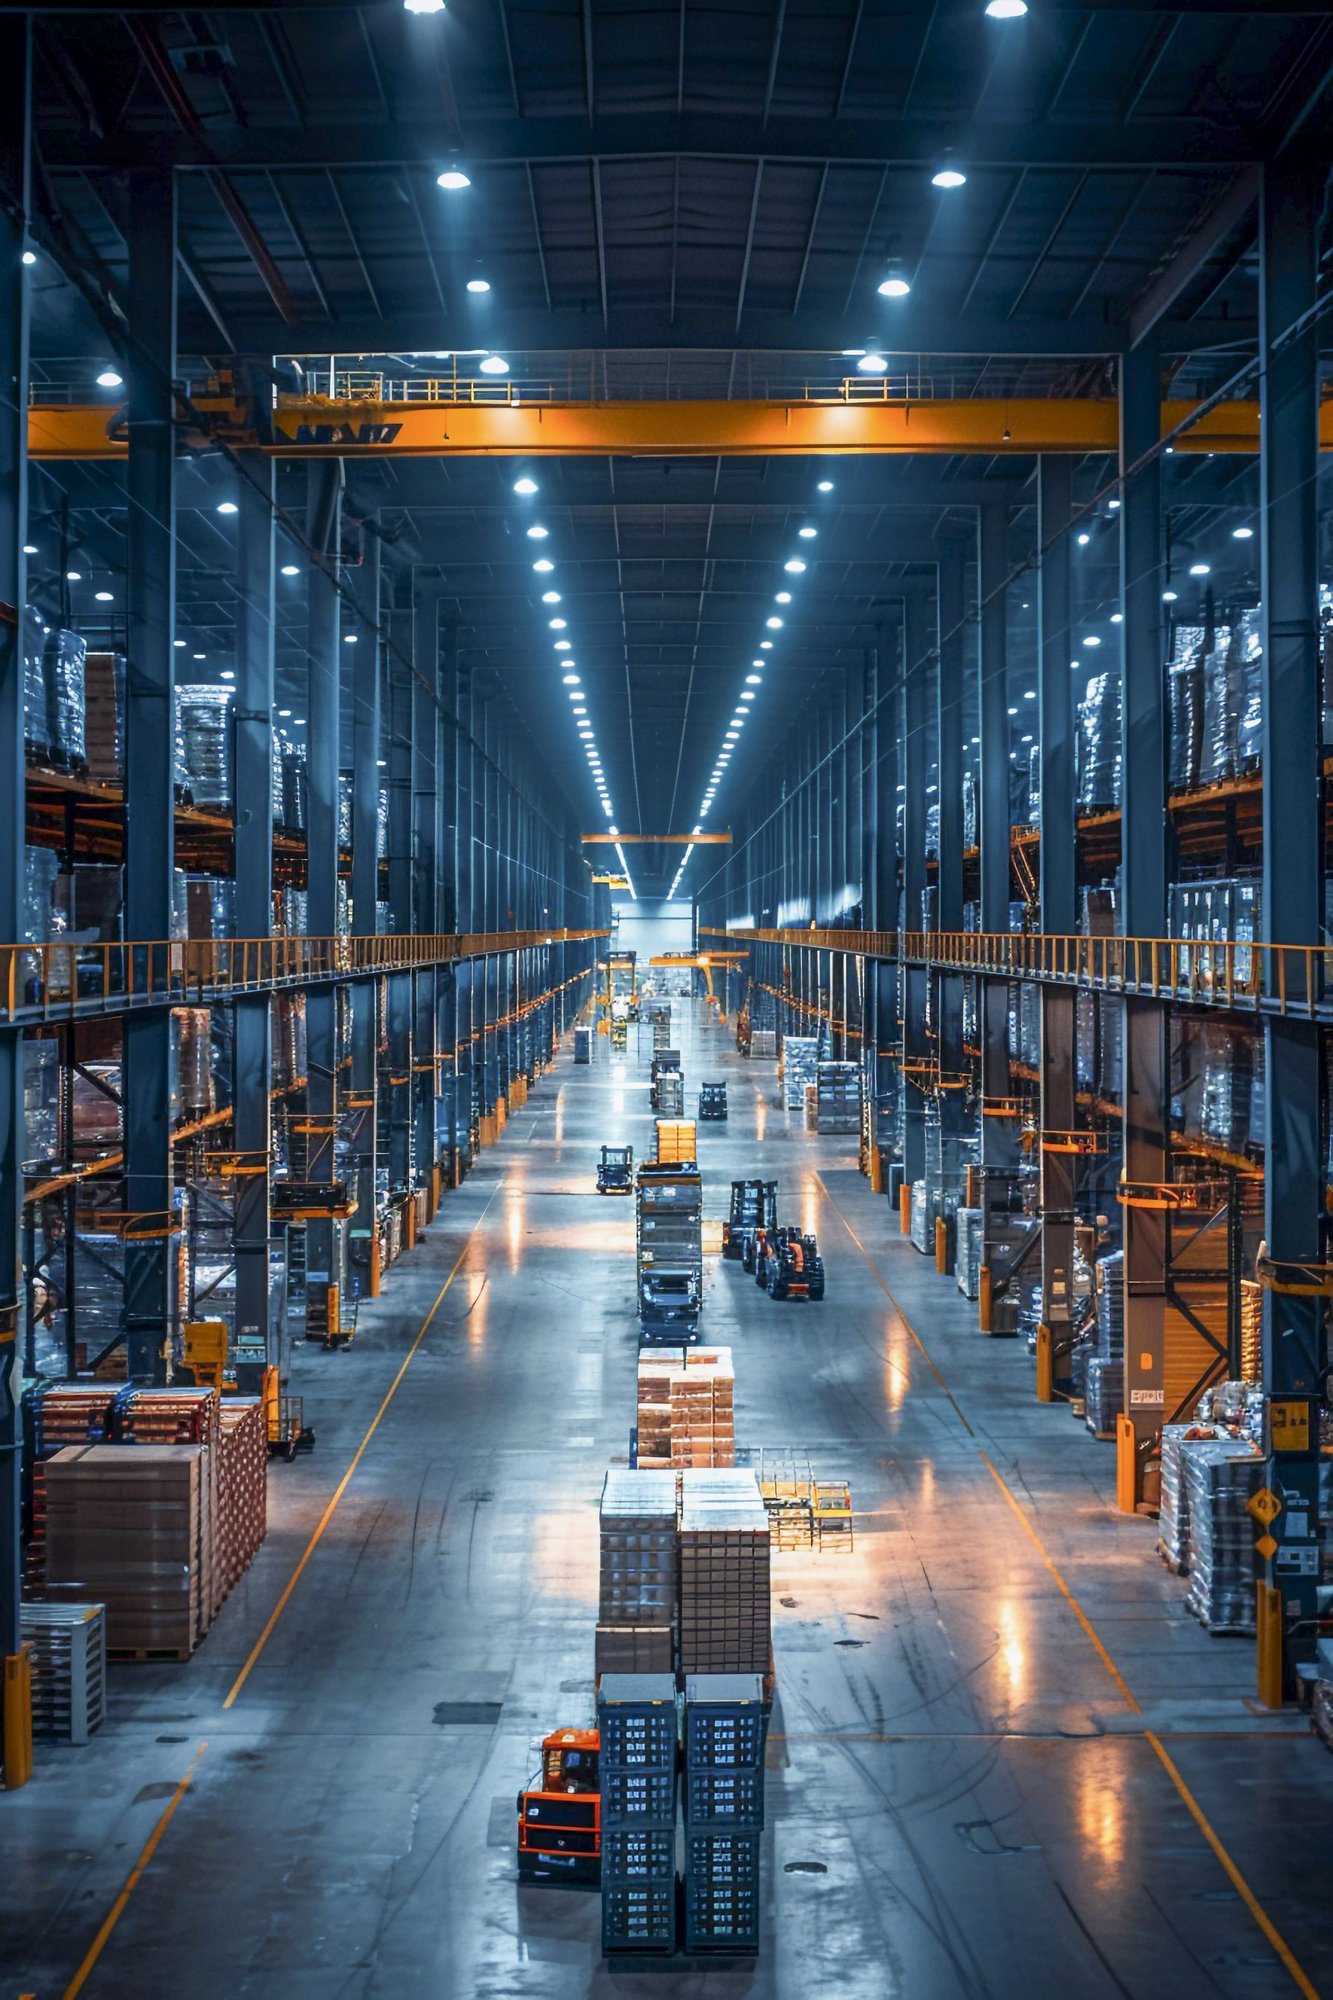 photorealistic-scene-with-warehouse-logistics-operations